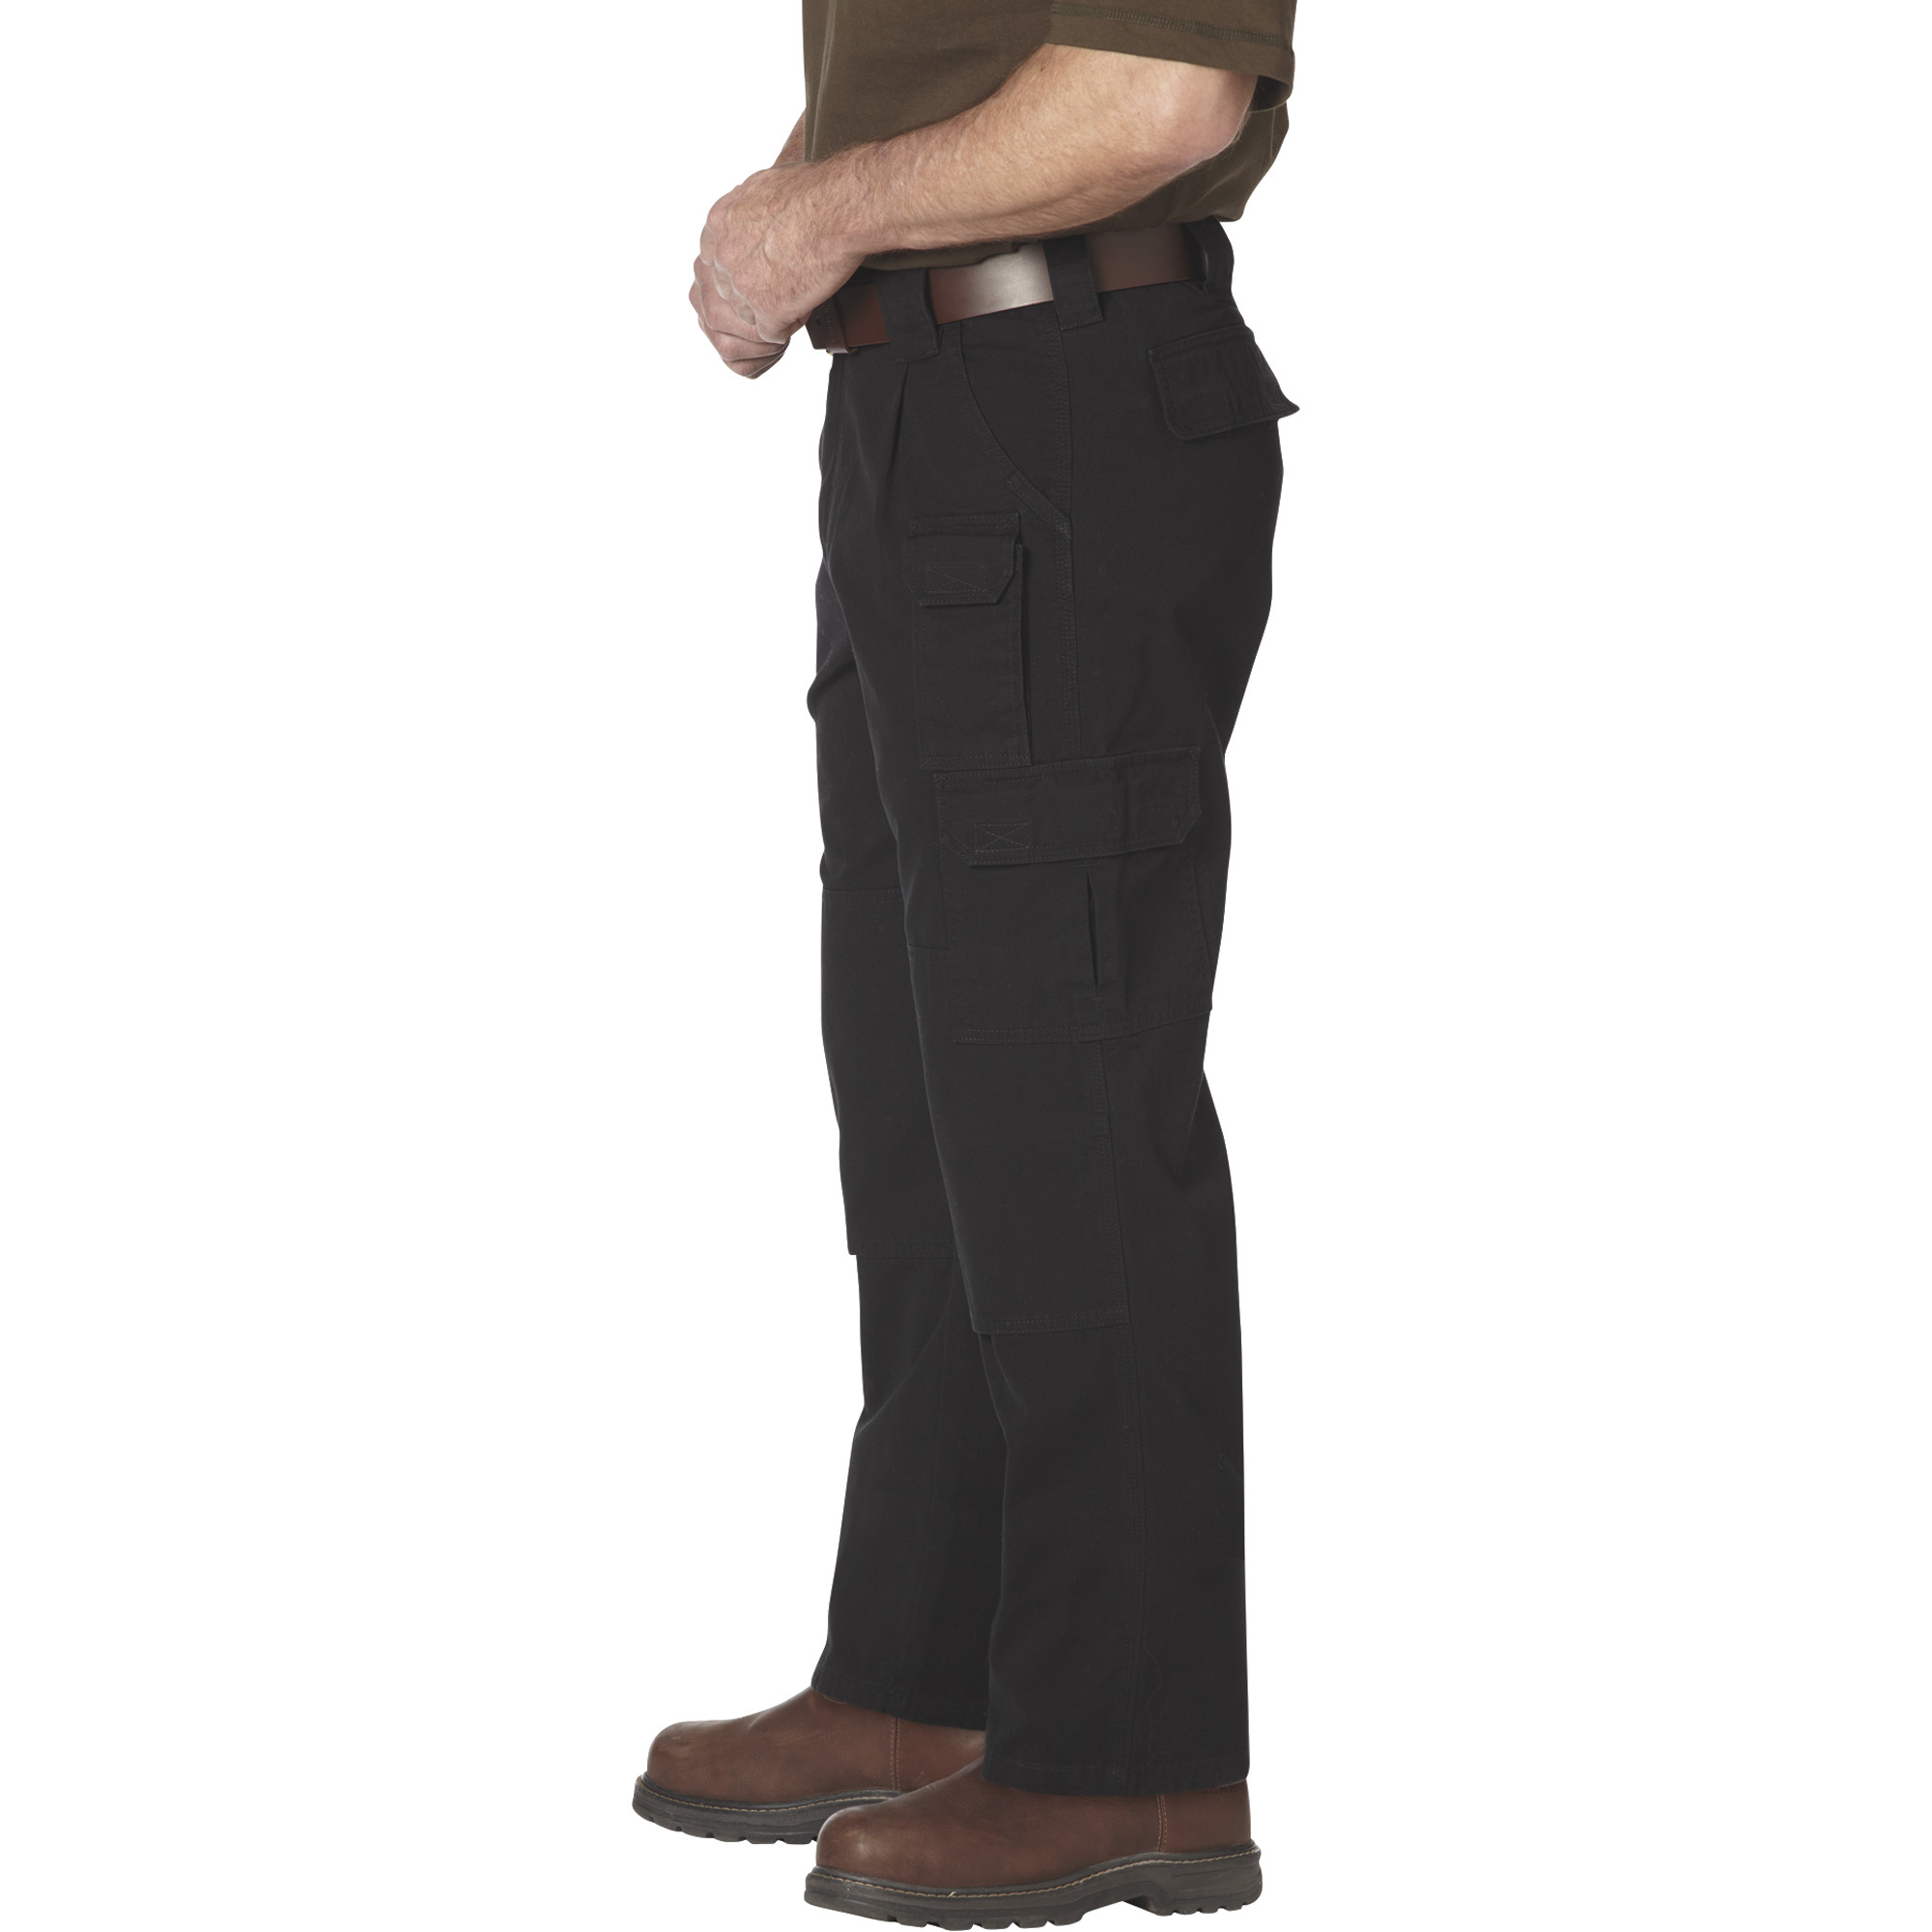 Gravel Gear Men's 7-Pocket Tactical Pants with Teflon - Black, 32Inch Waist x 32Inch Inseam